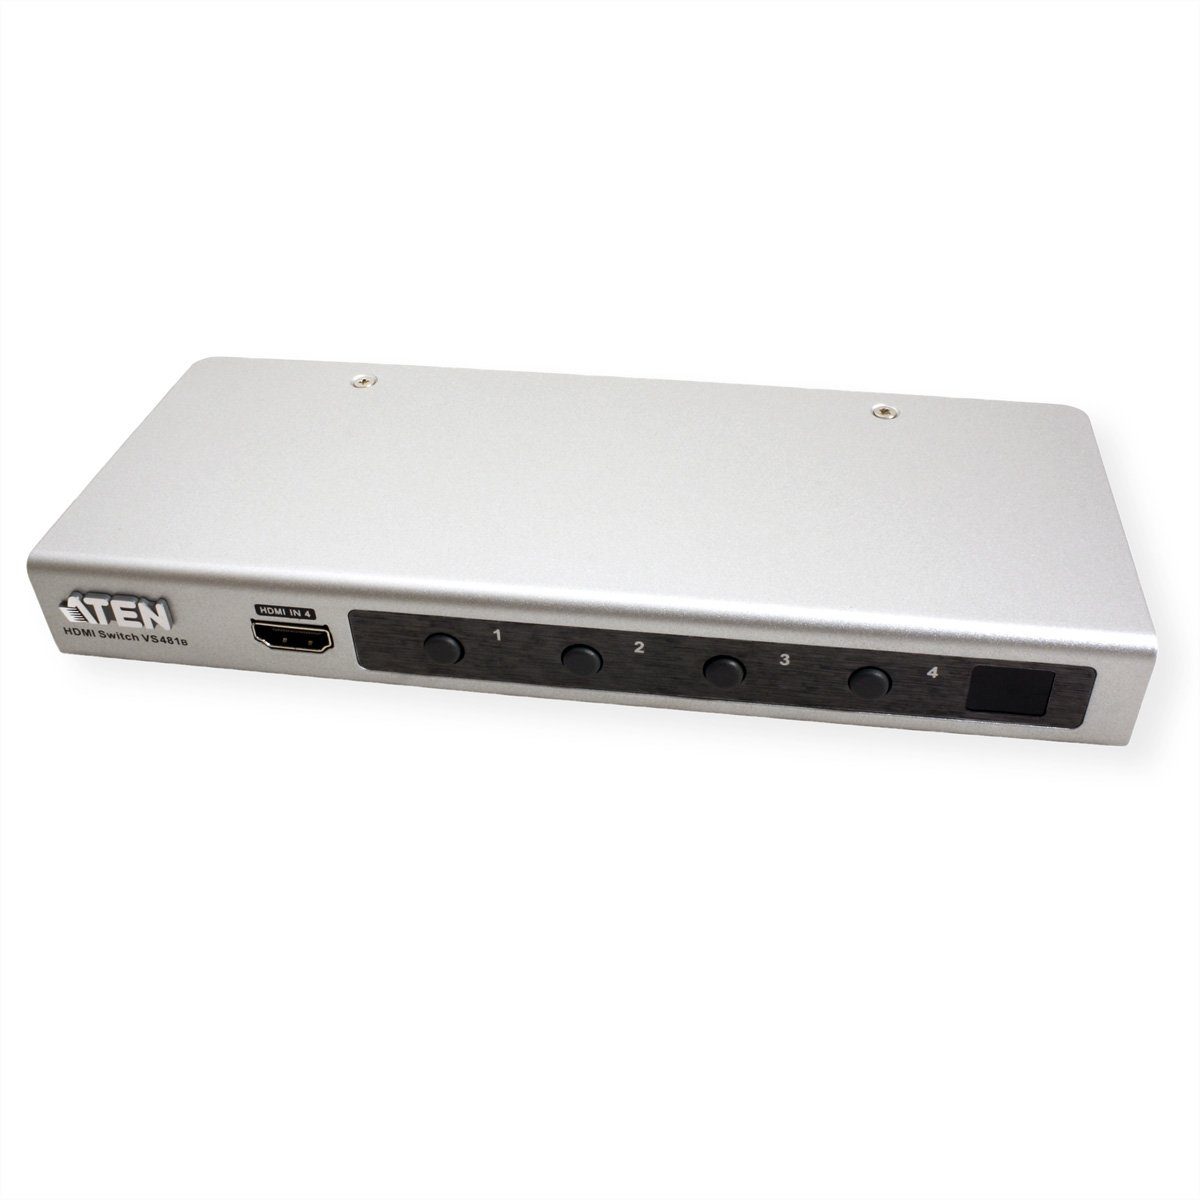 Switch & Audio- 4 Video-Adapter HD mit Ultra HDMI Ports Aten 4K VS481B